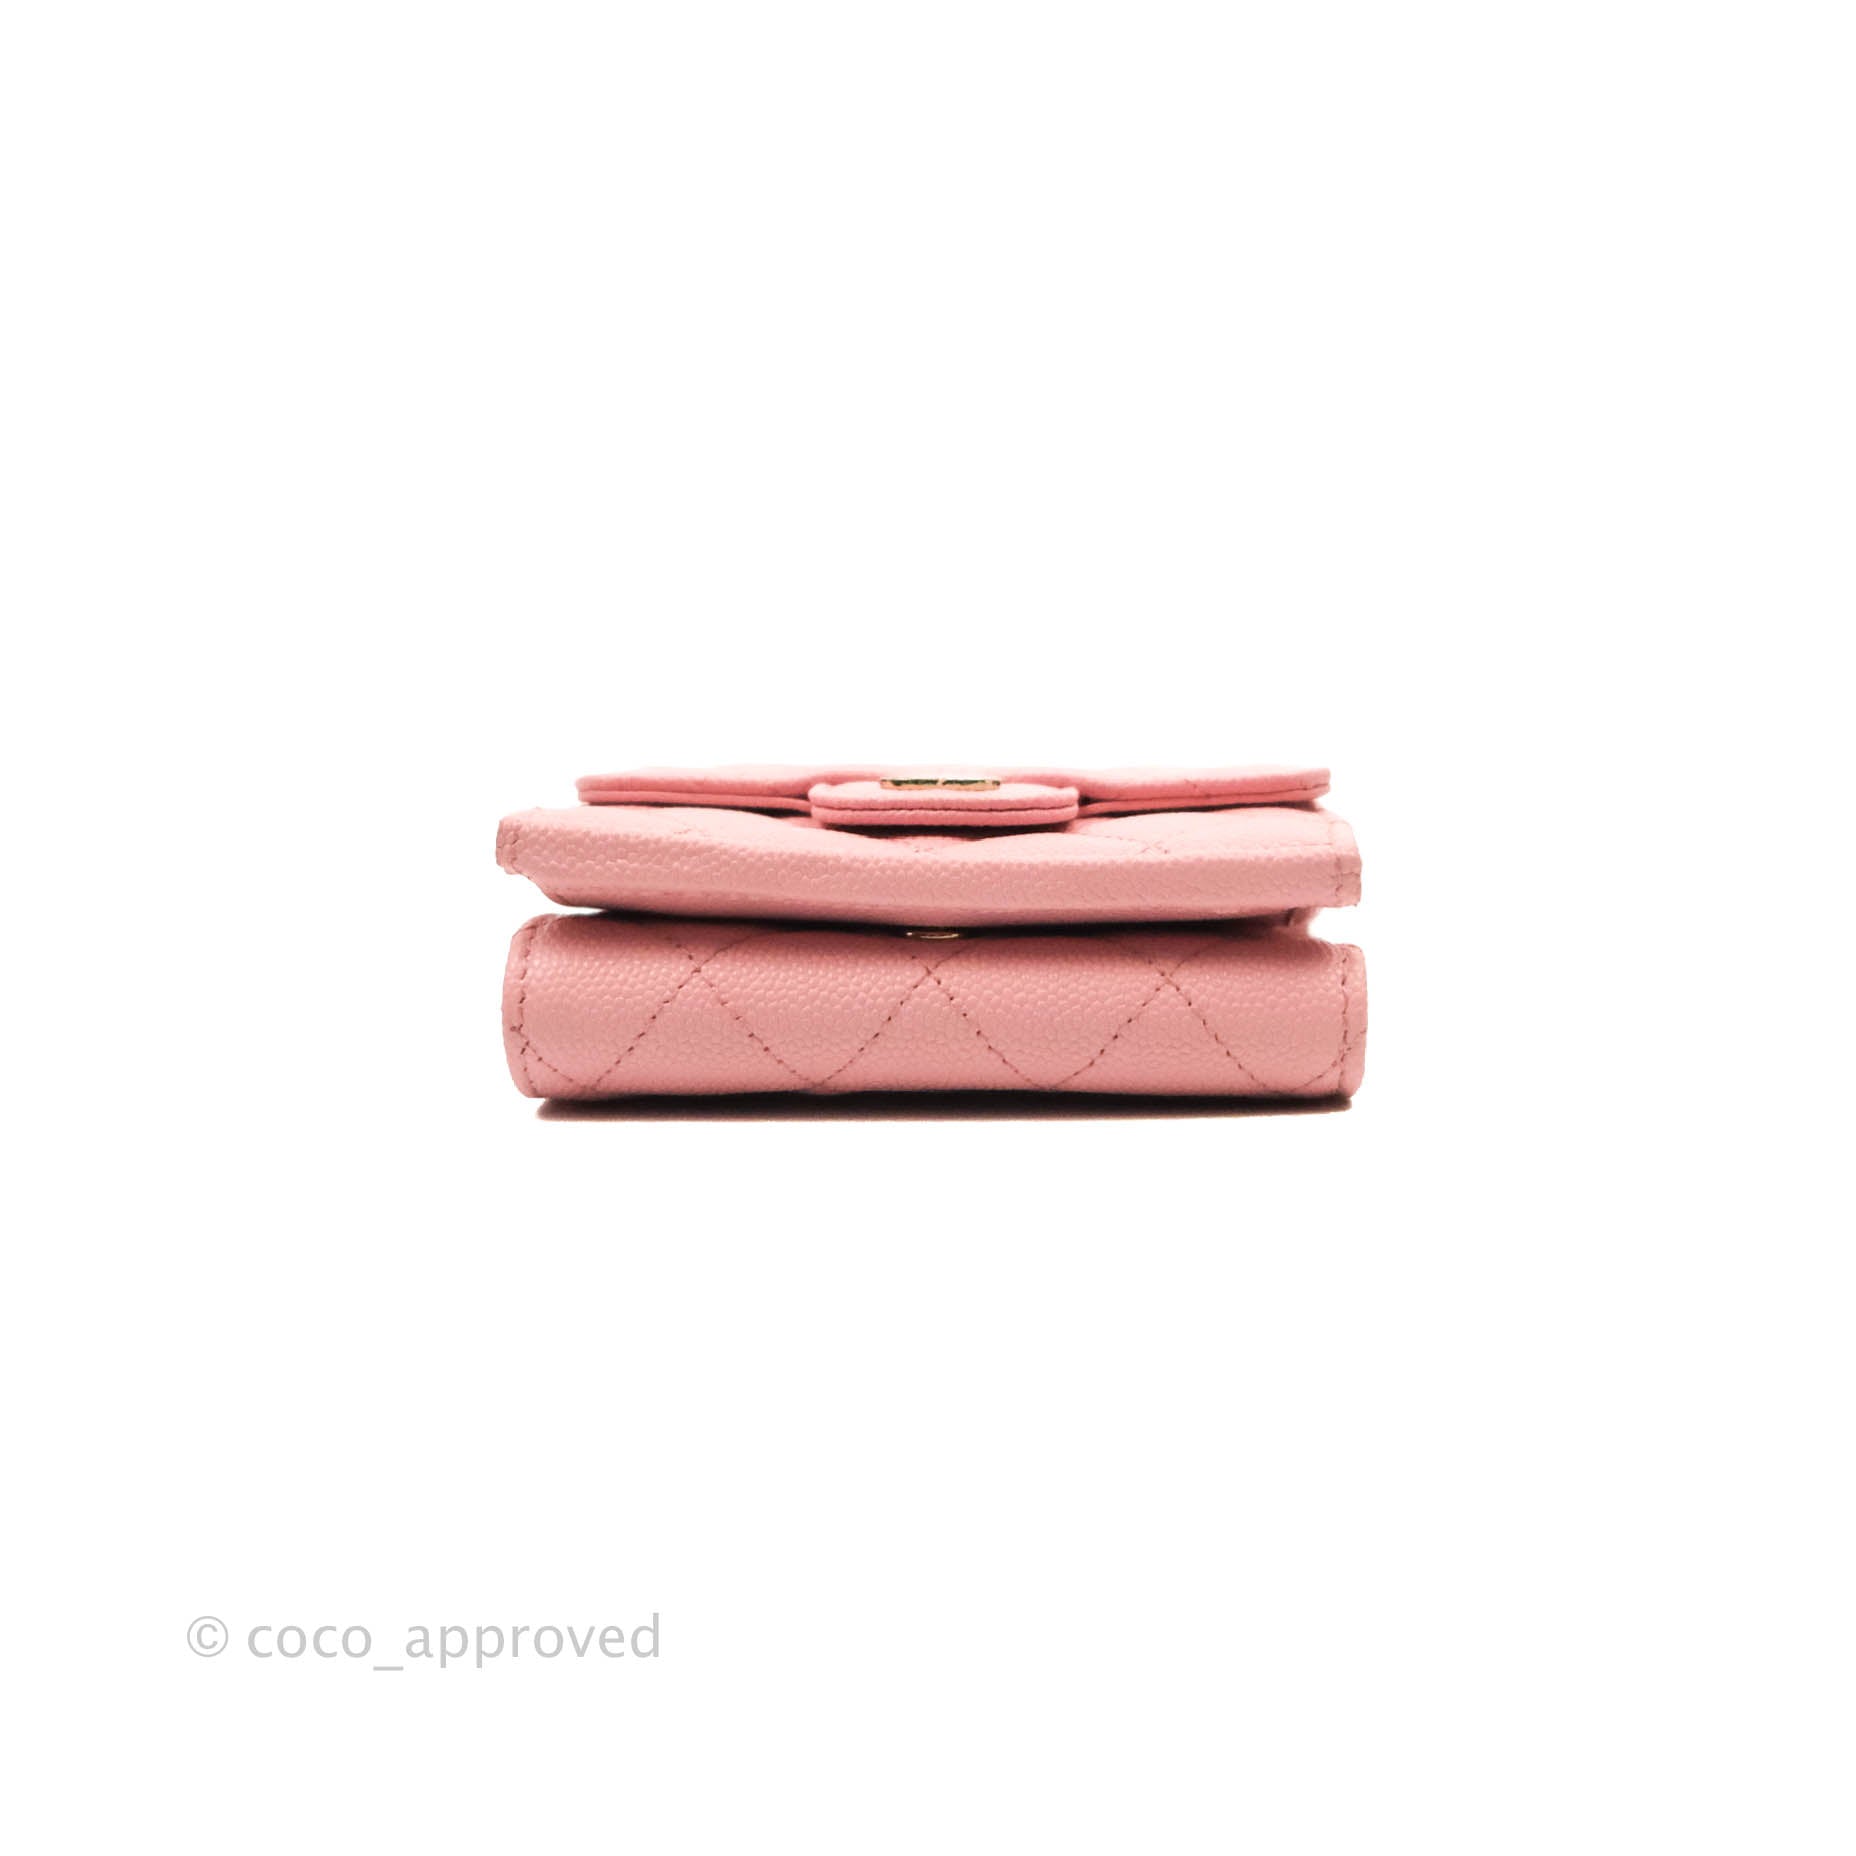 XL Trifold Wallet (Crimson Pink)